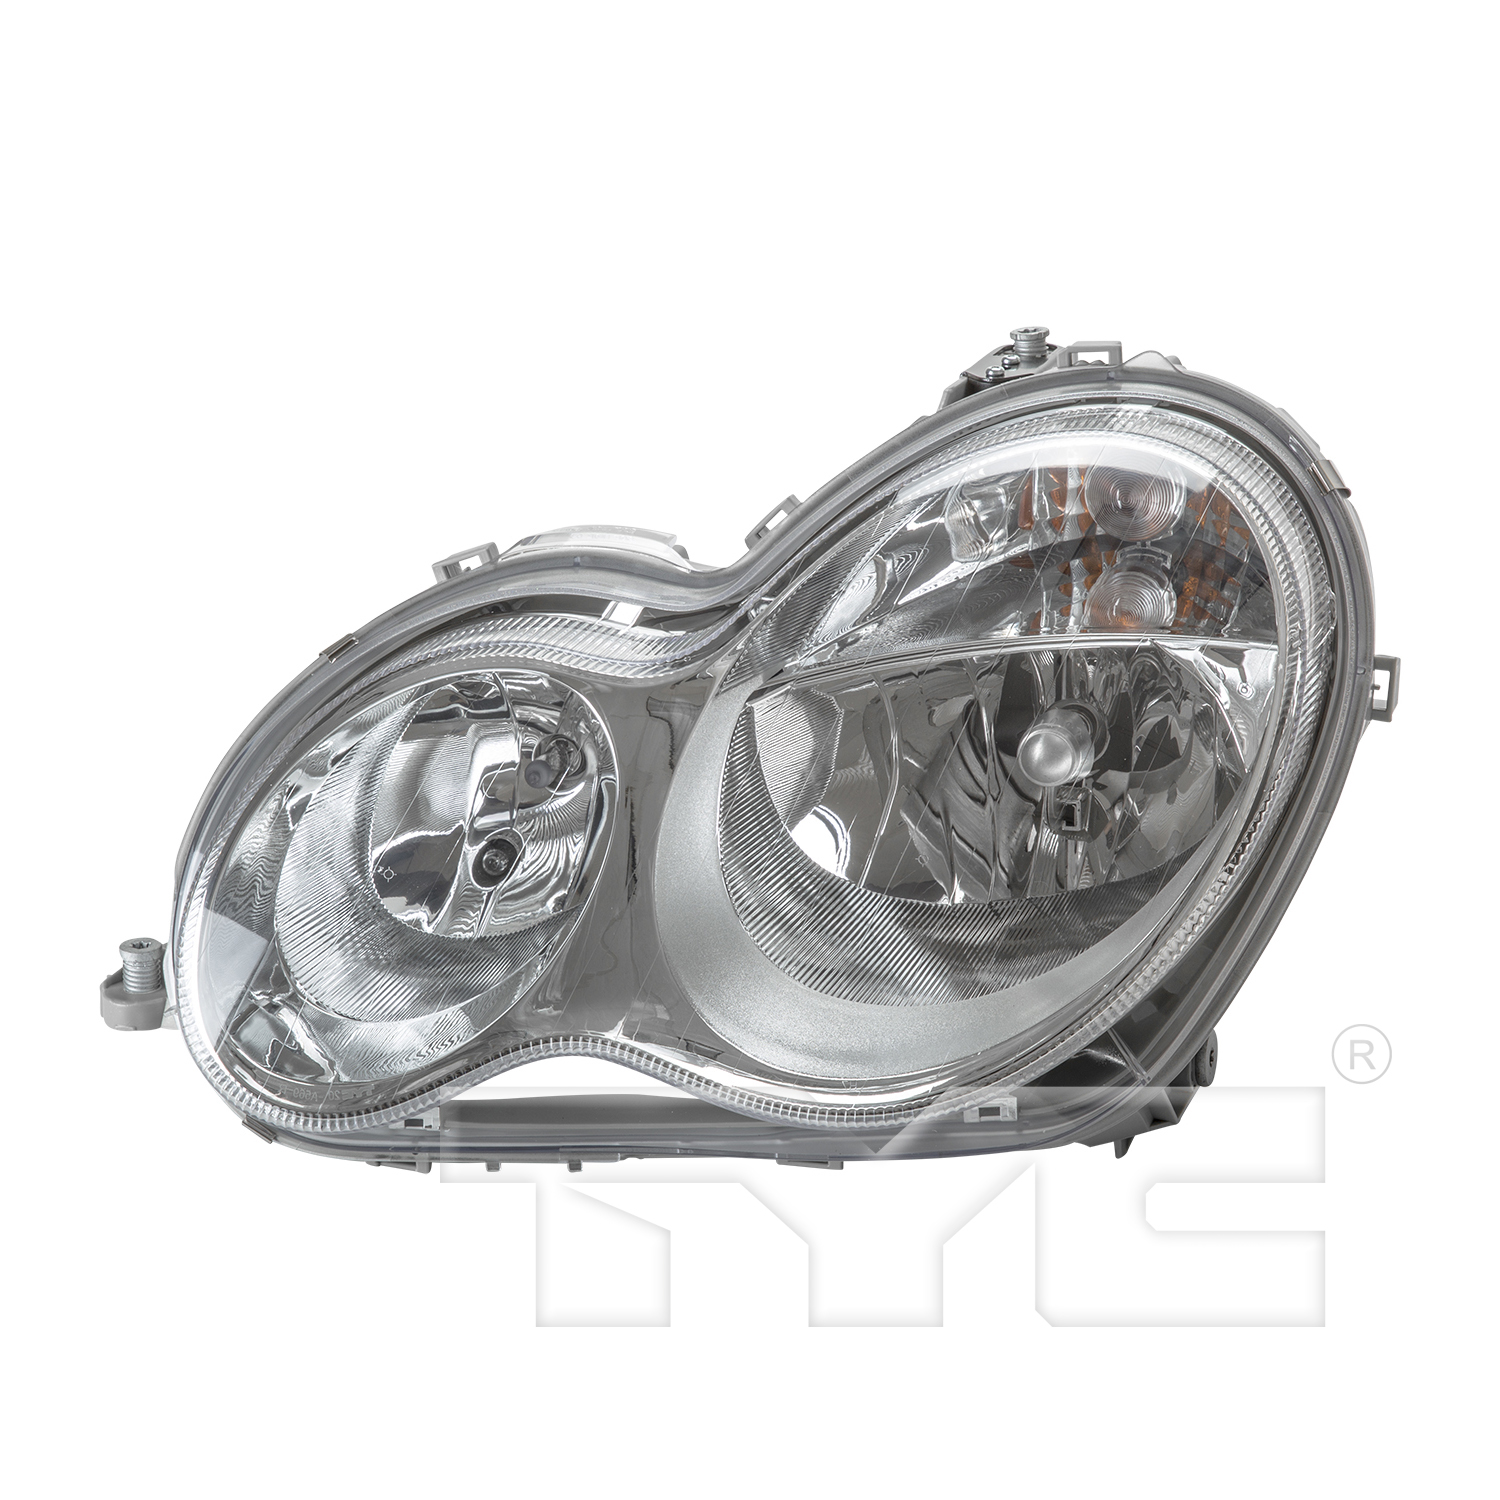 Aftermarket HEADLIGHTS for MERCEDES-BENZ - C280, C280,05-07,LT Headlamp assy composite